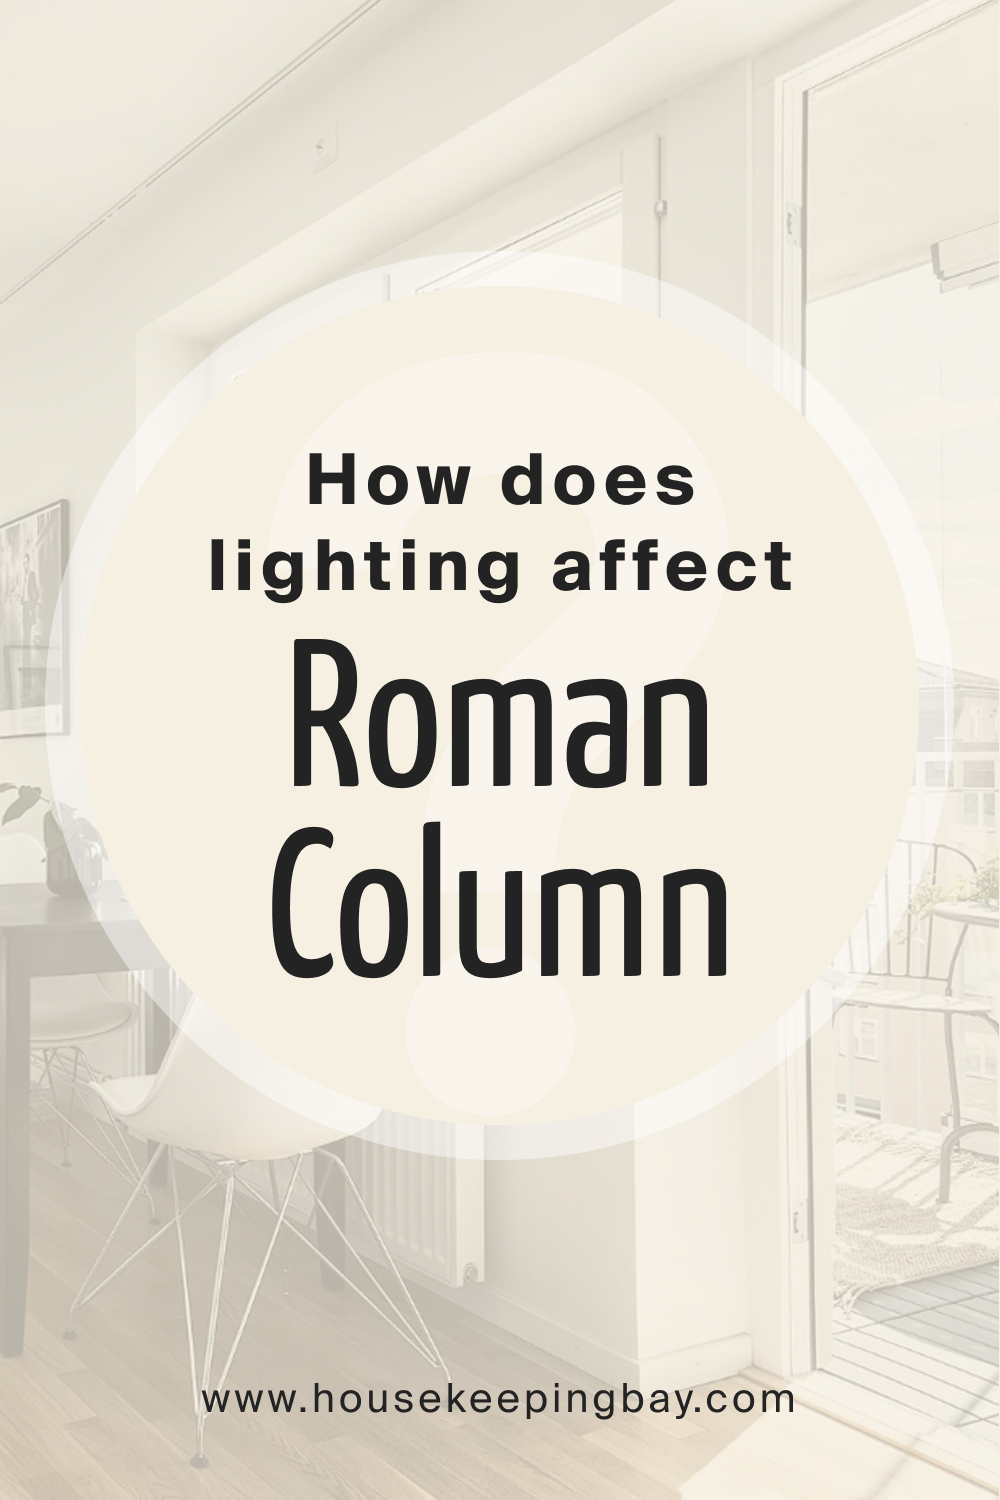 How does lighting affect SW Roman Column